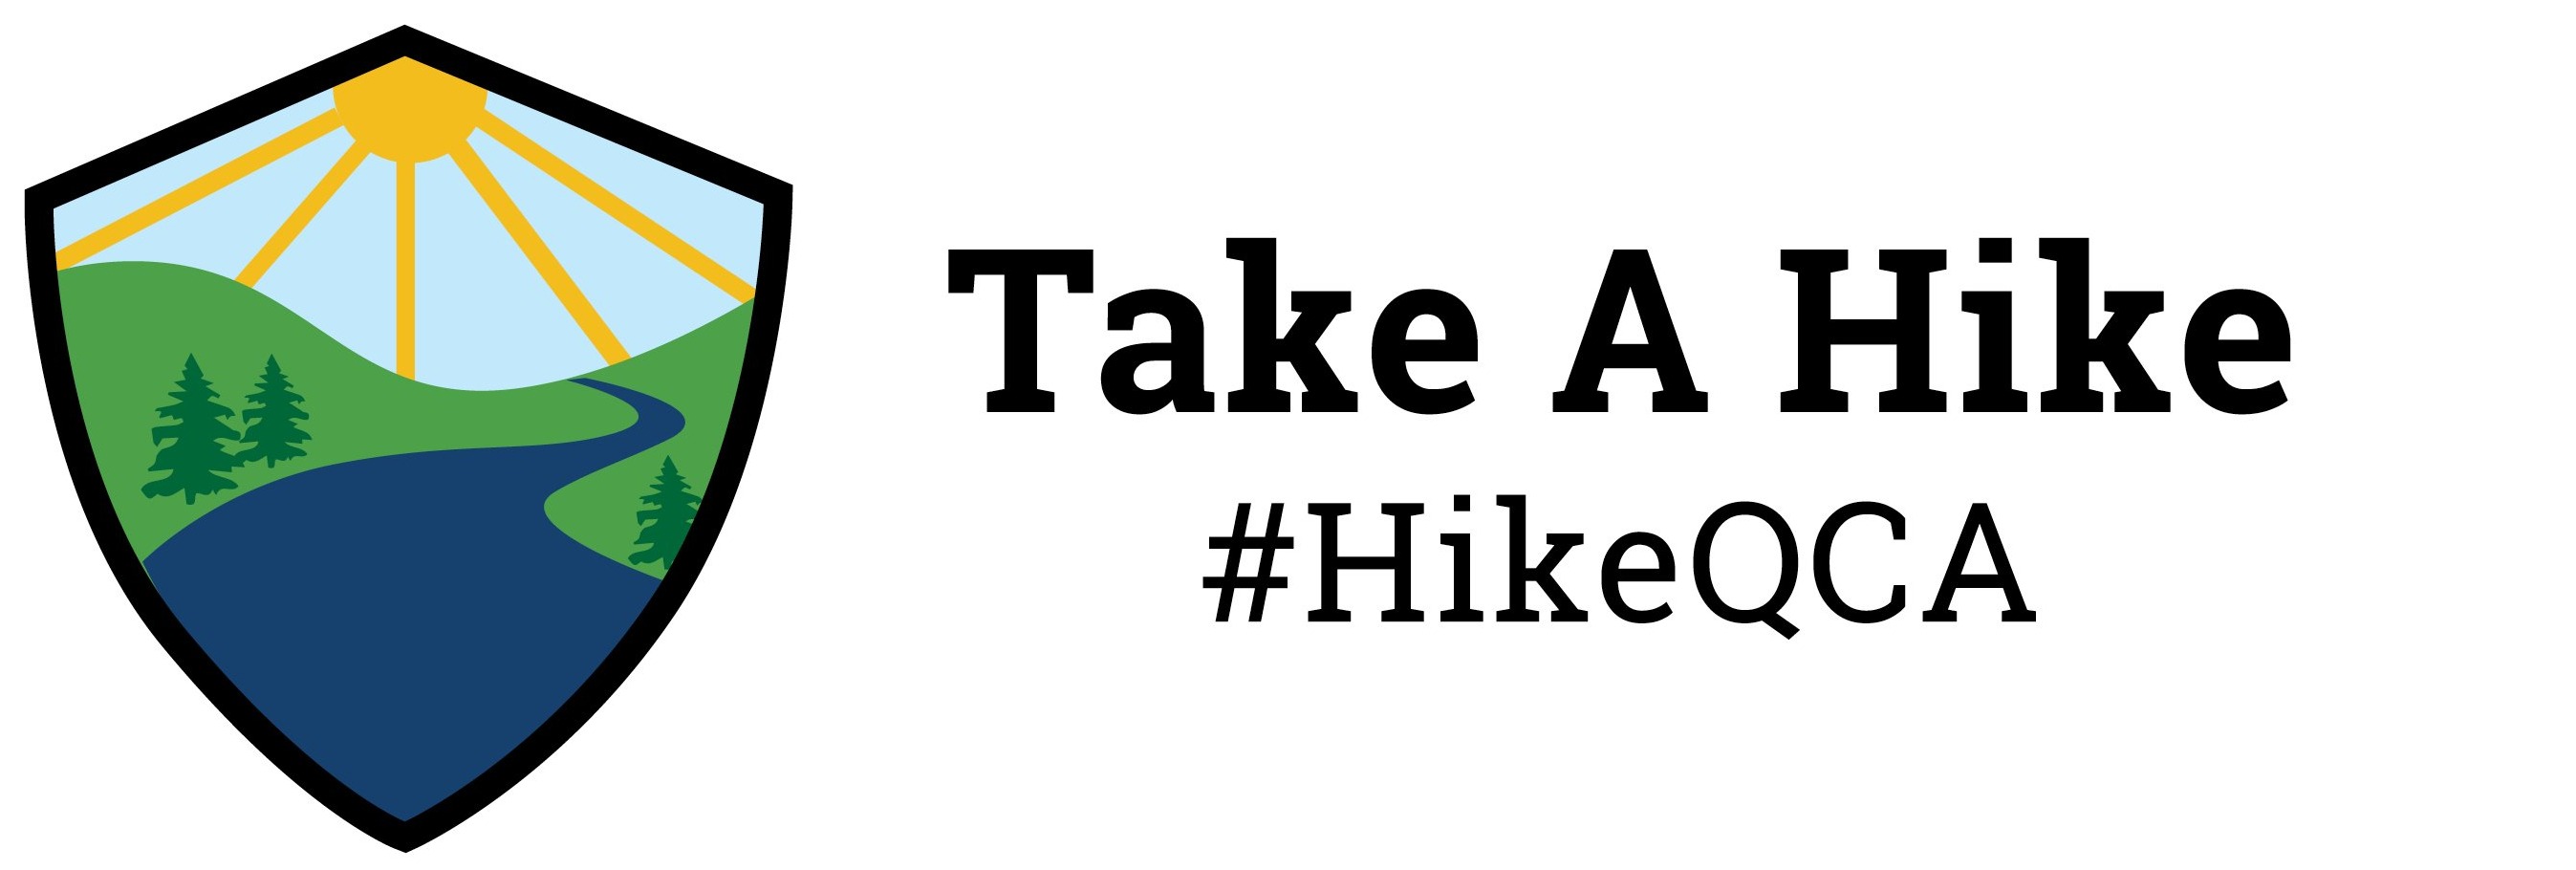 Take a Hike logo